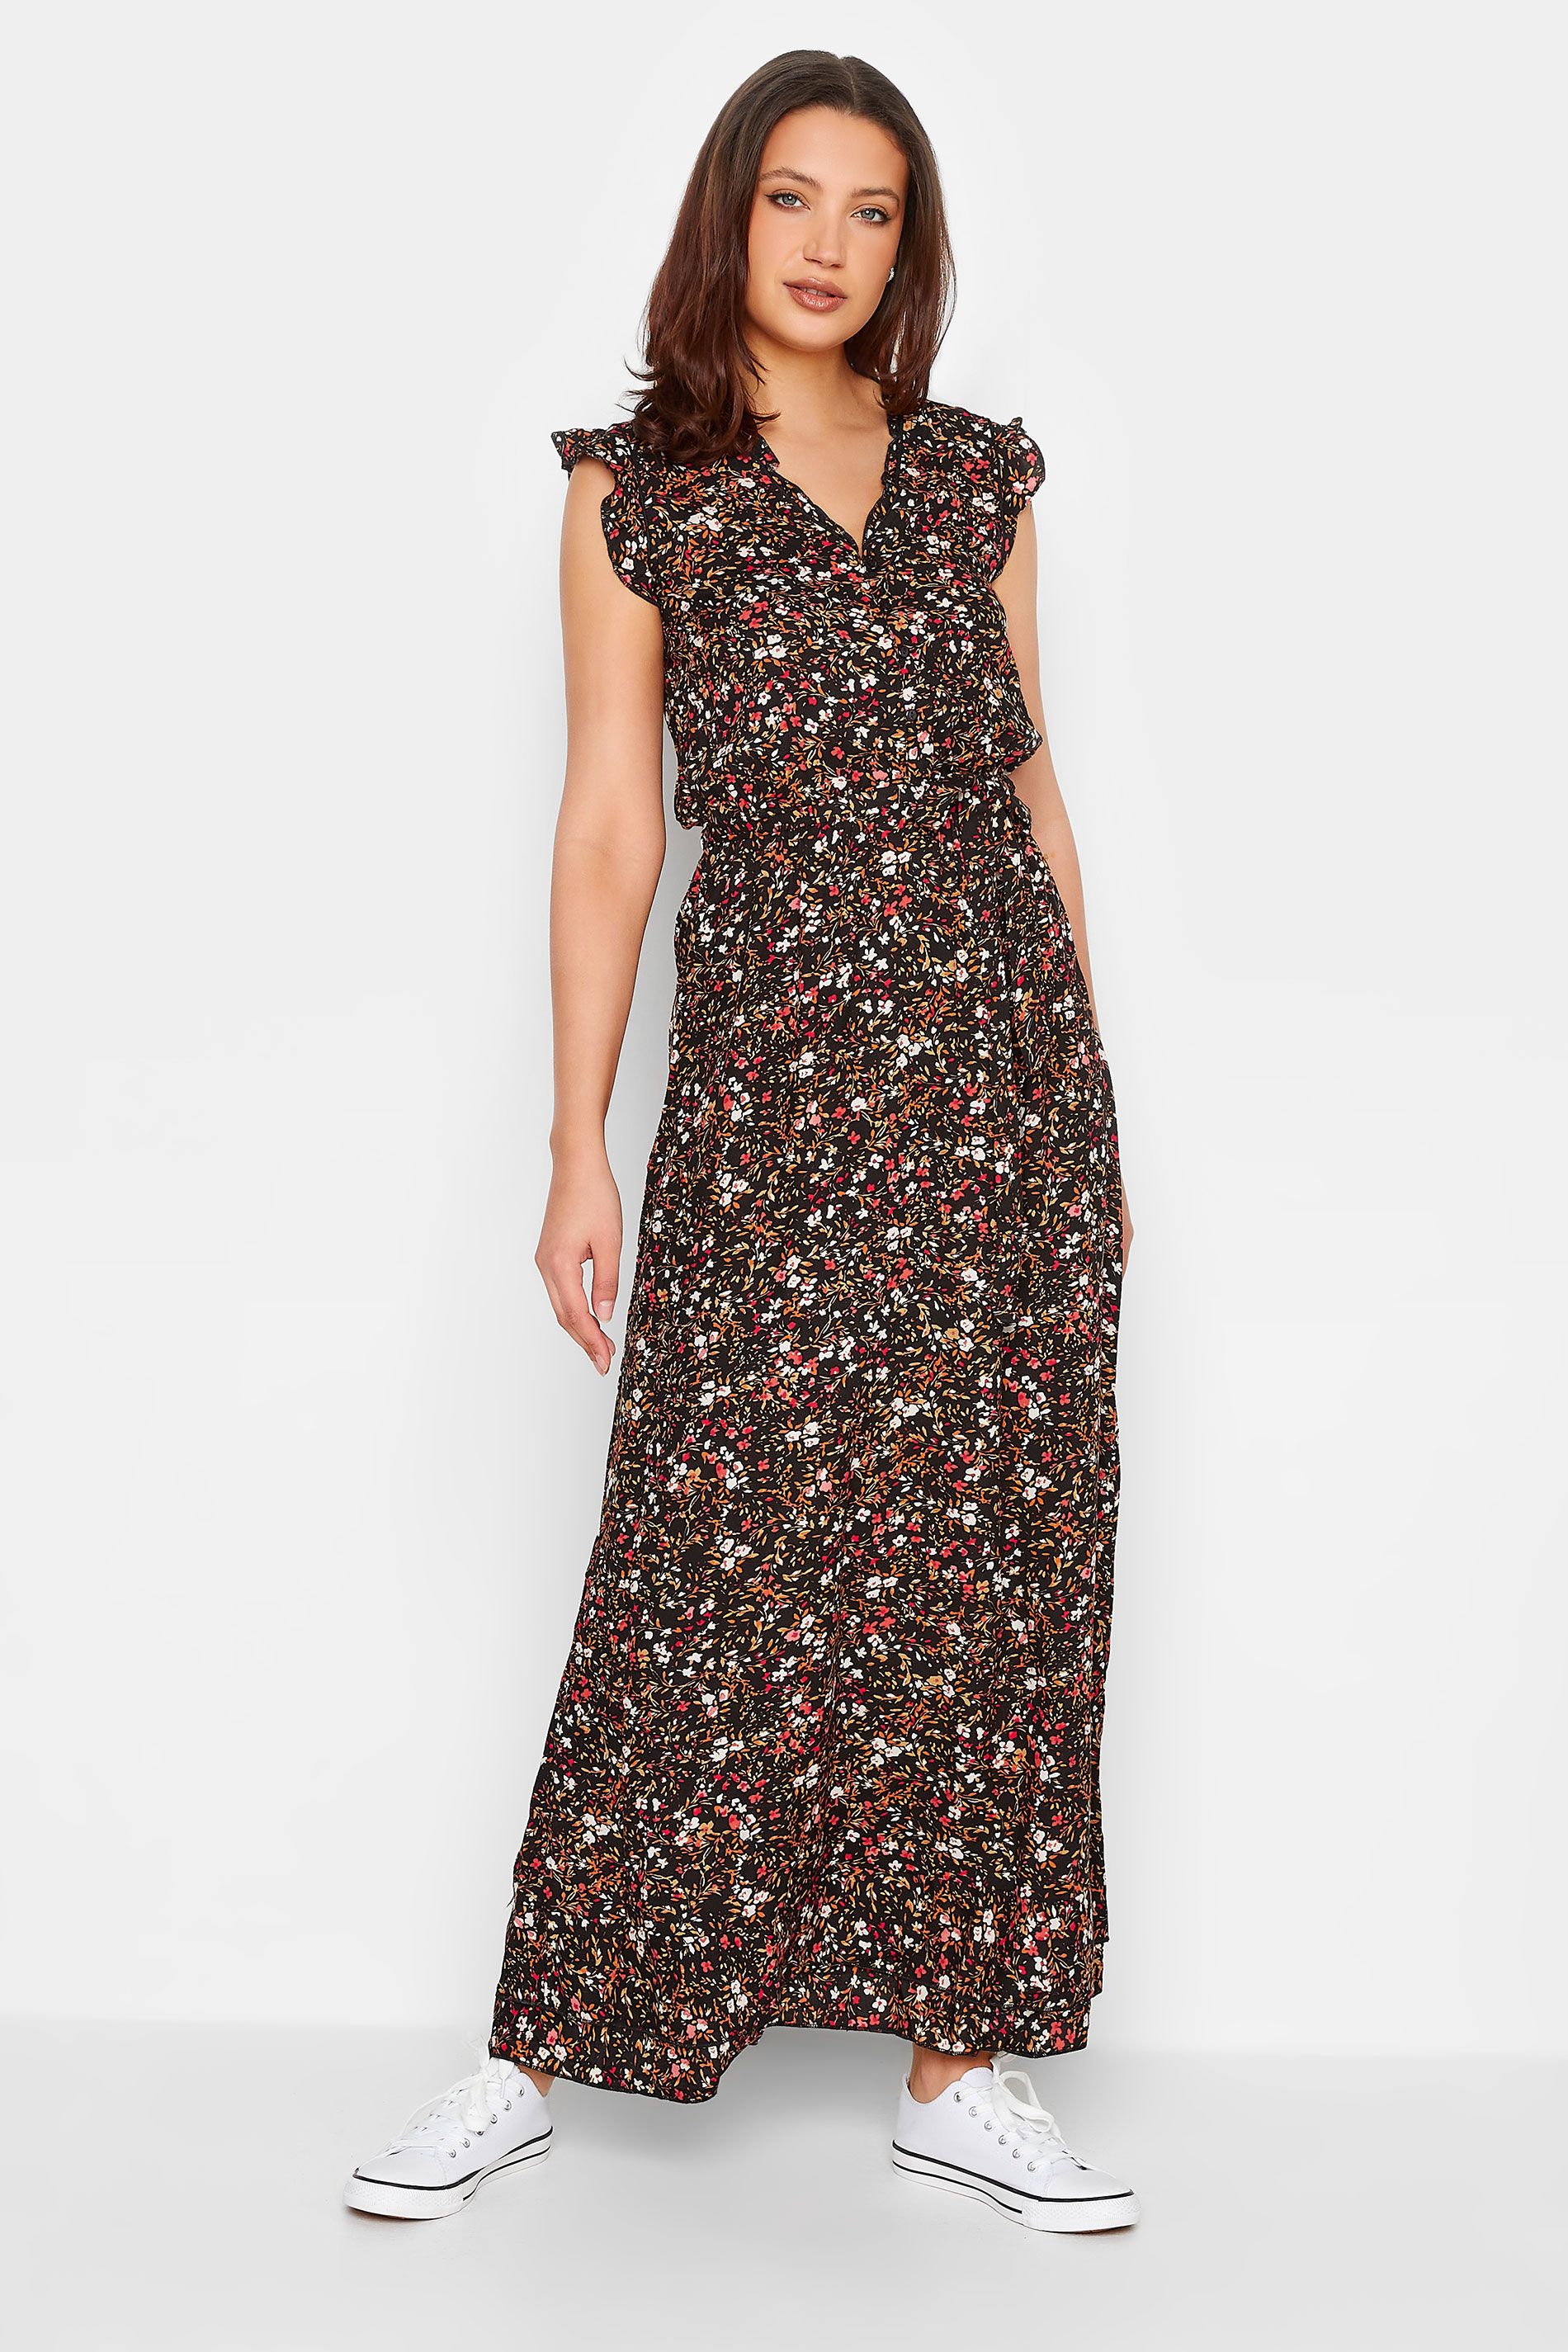 LTS Tall Black Ditsy Floral Maxi Dress | Long Tall Sally